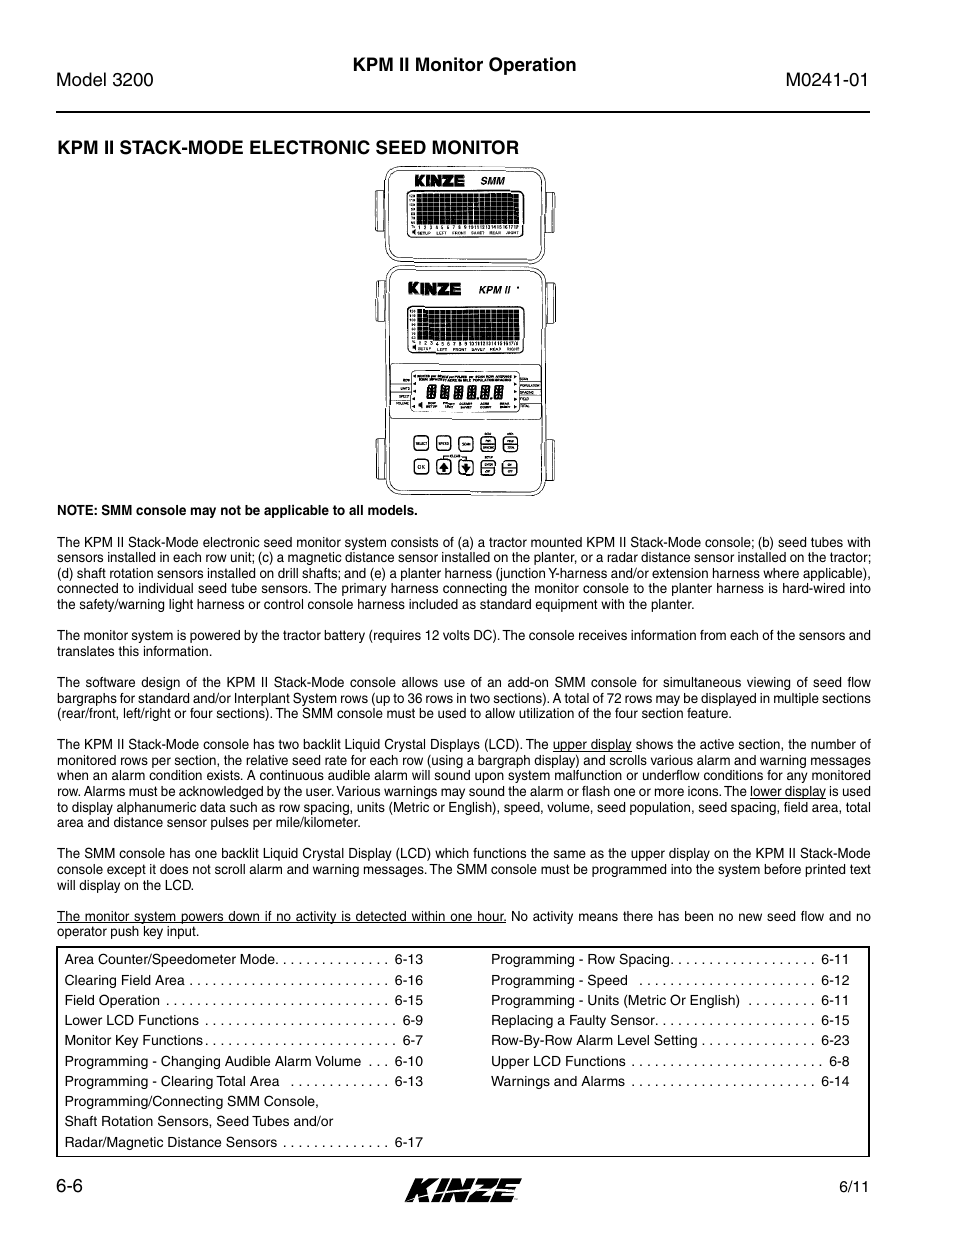 Kpm ii stack-mode electronic seed monitor, Kpm ii stack-mode electronic seed monitor -6, Kpm ii monitor operation | Kinze 3200 Wing-Fold Planter Rev. 7/14 User Manual | Page 96 / 192